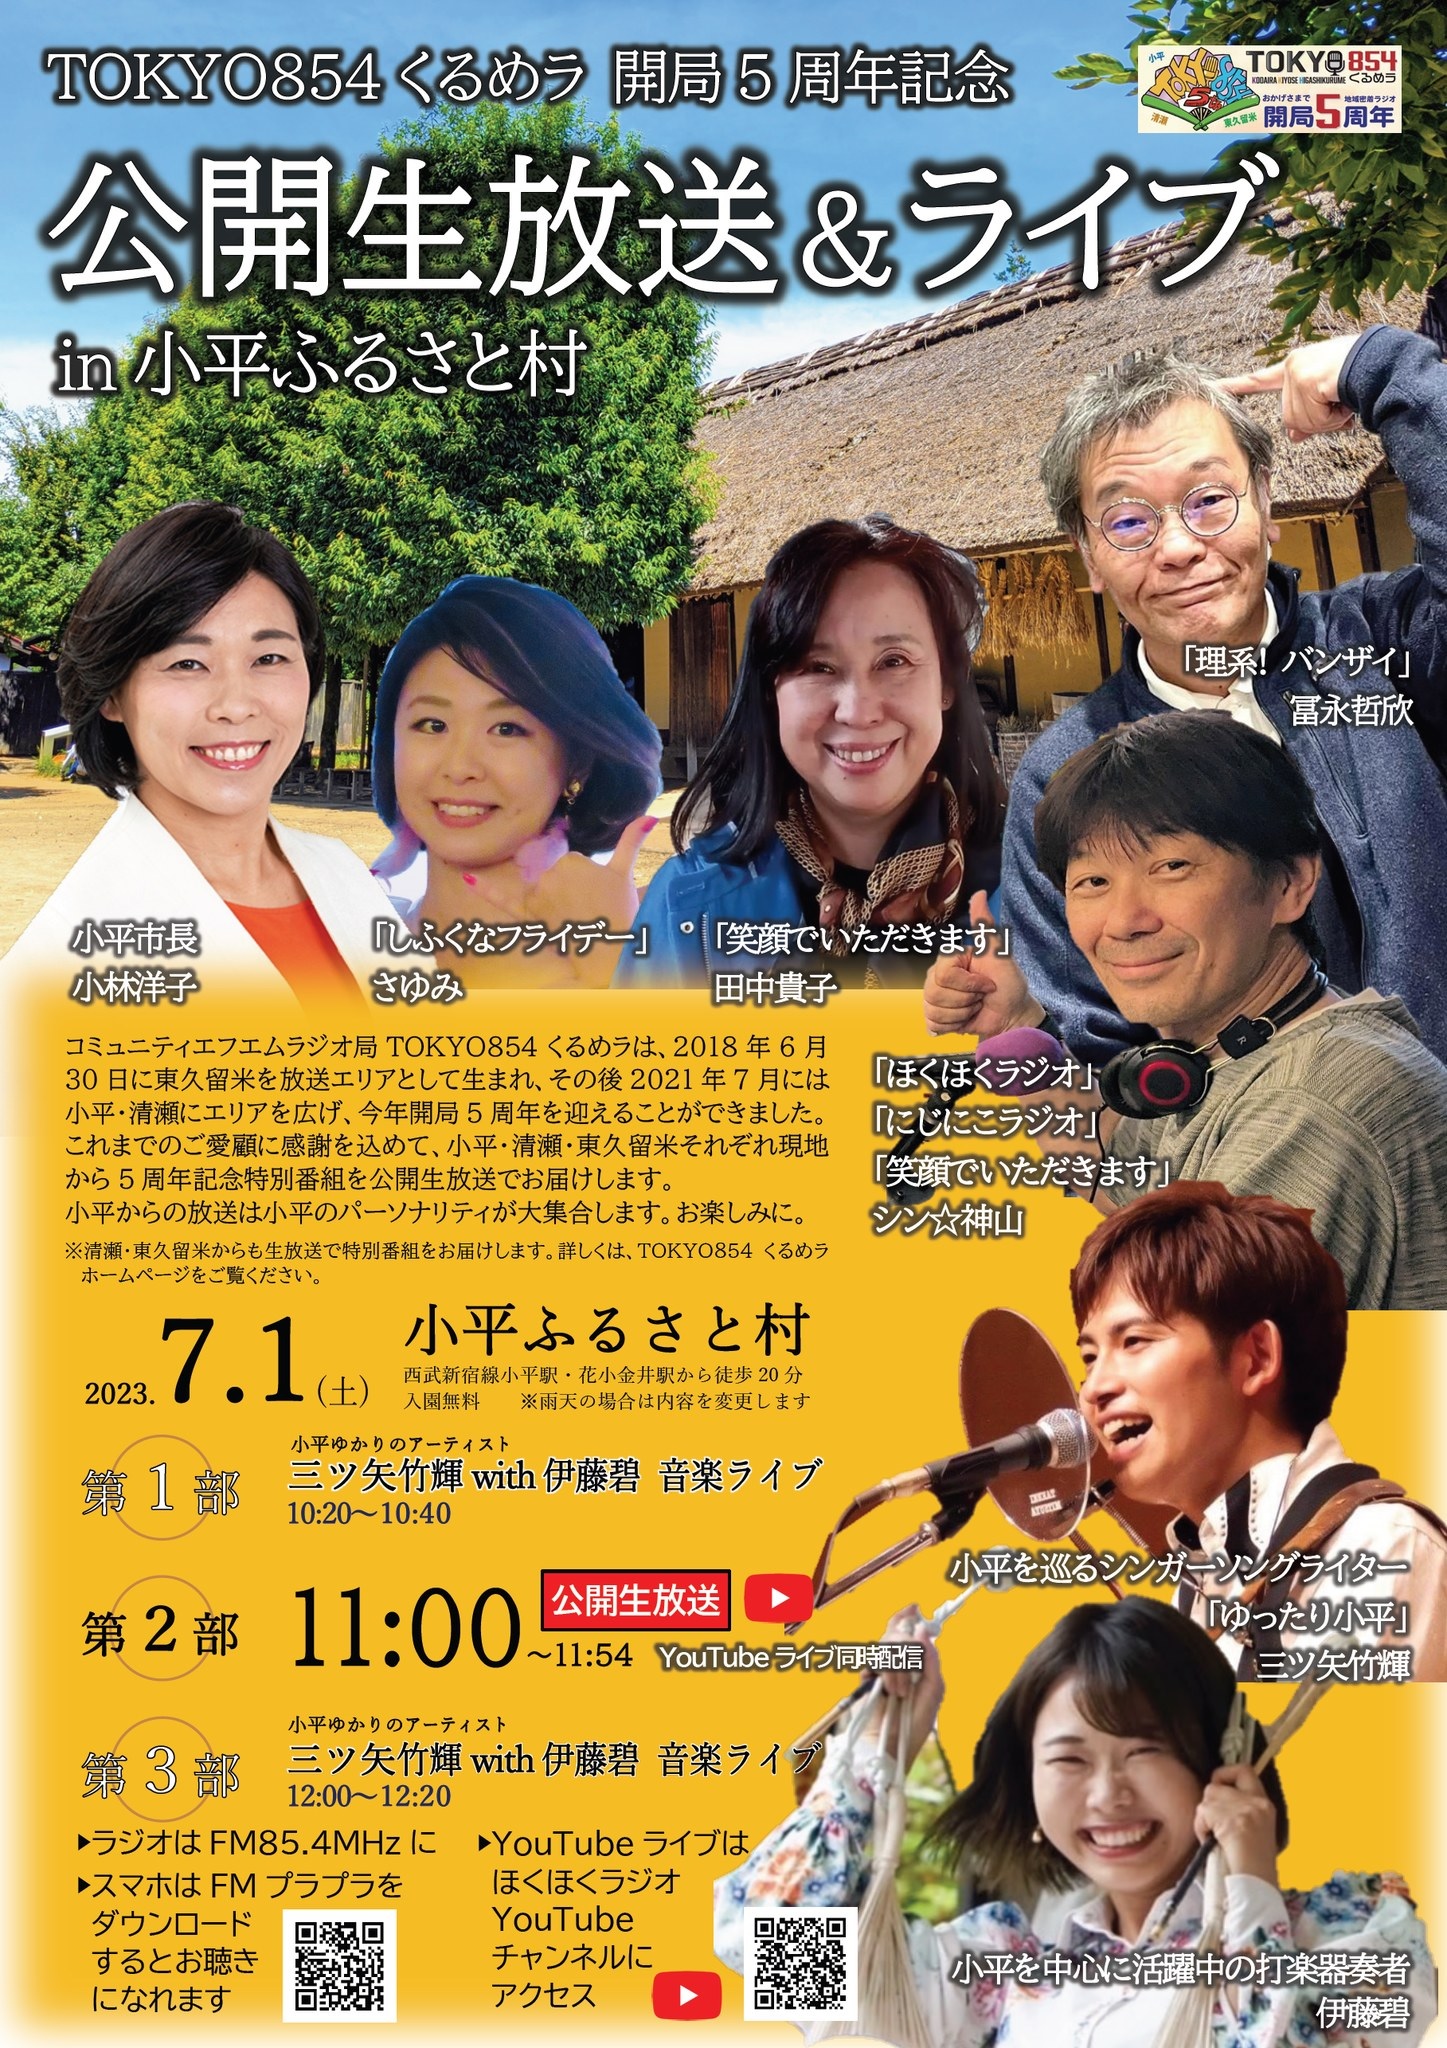 TOKYO854くるめラ 開局5周年記念公開生放送&ライブ in 小平ふるさと村のチラシの画像